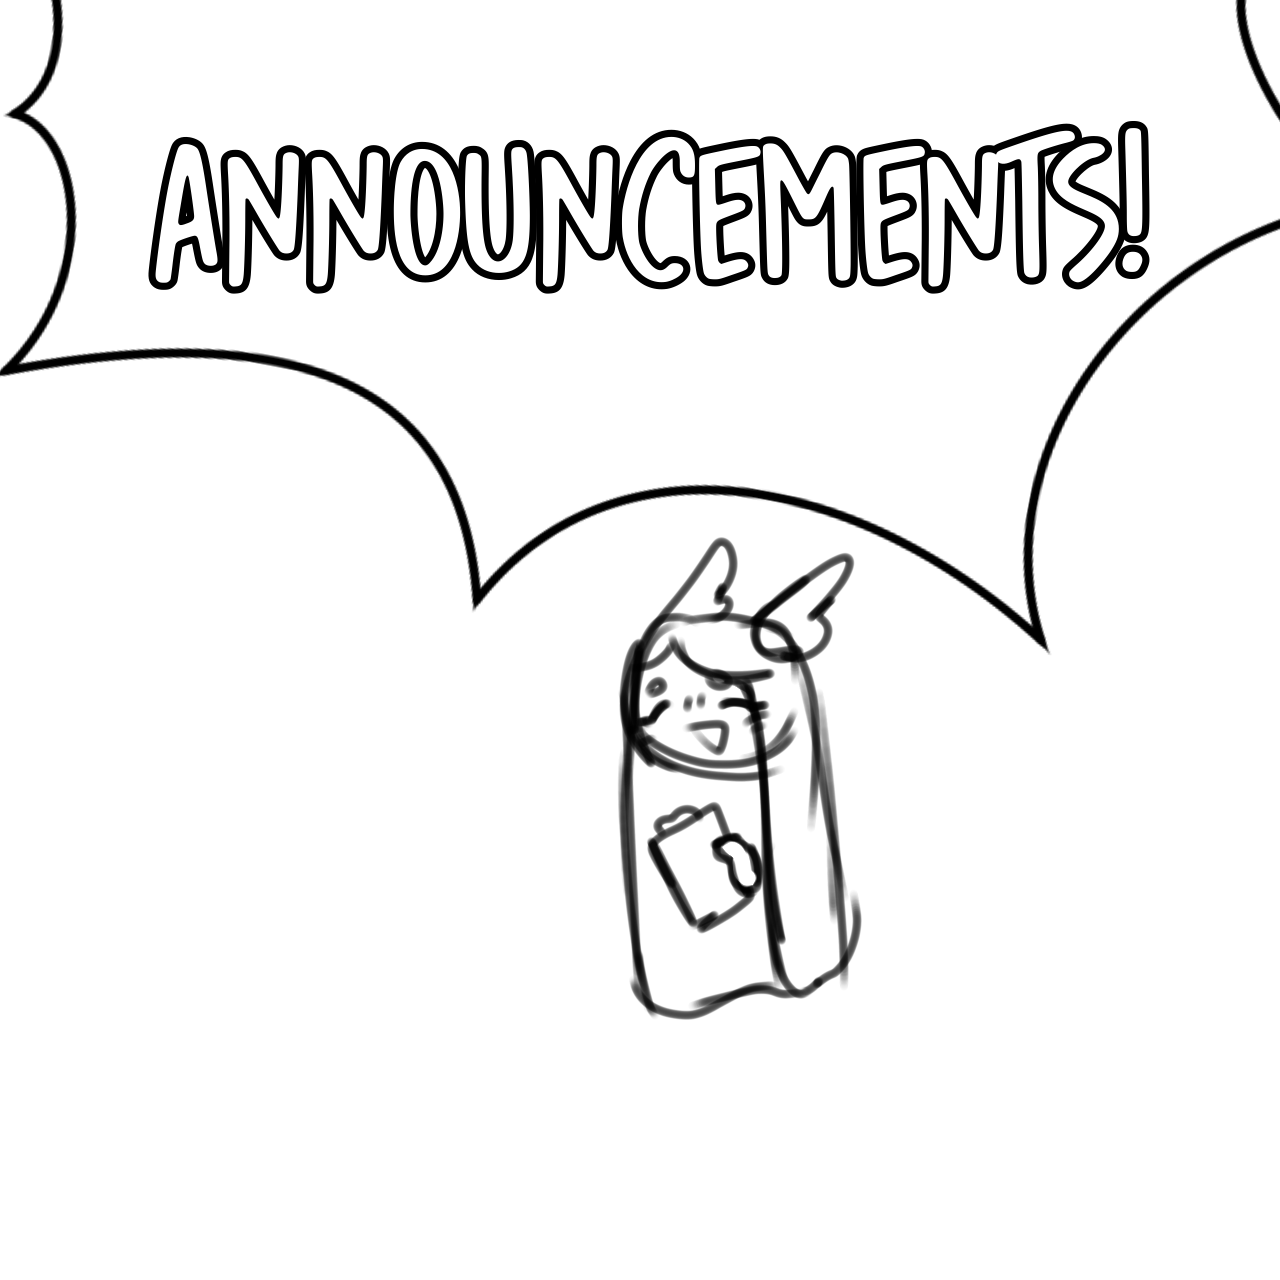 announcements-webtoon